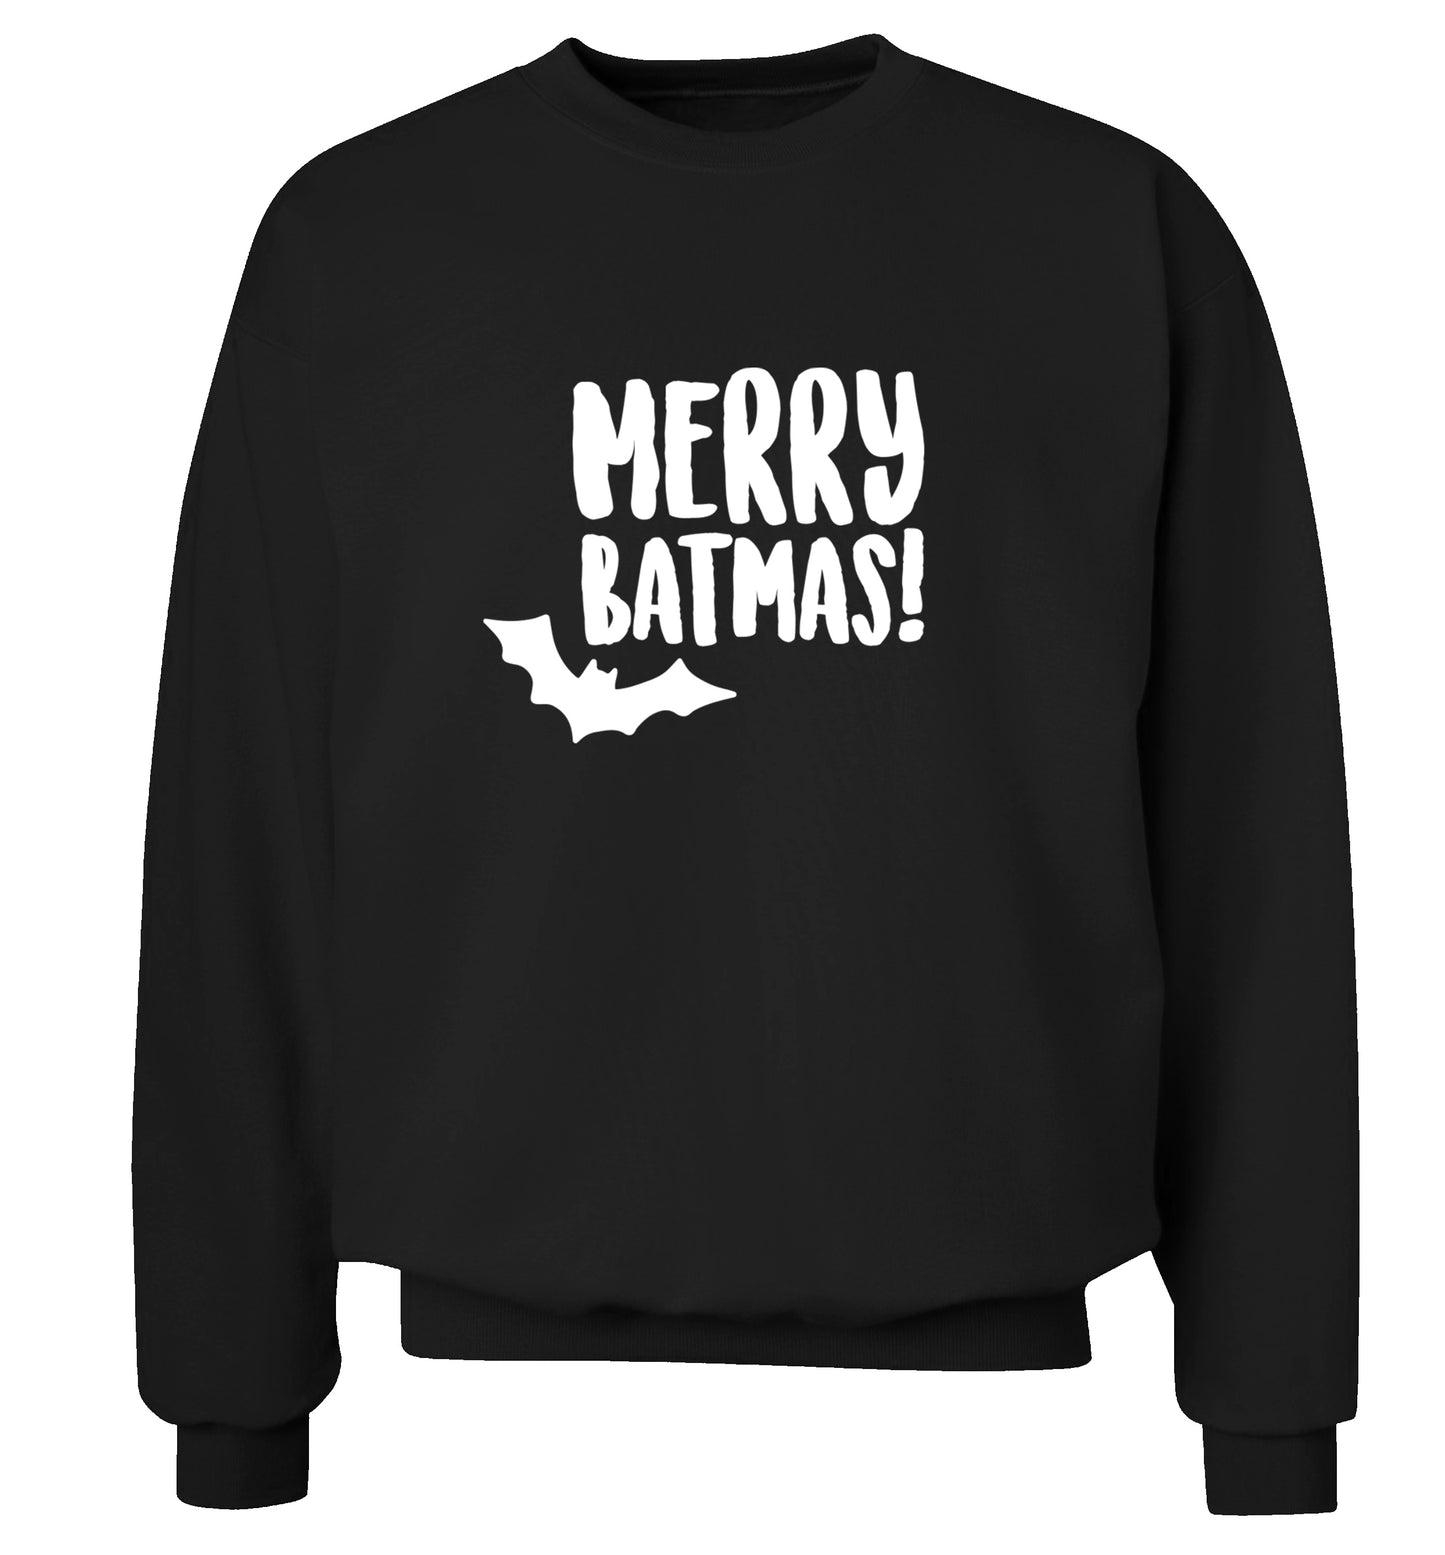 Merry Batmas Adult's unisex black Sweater 2XL